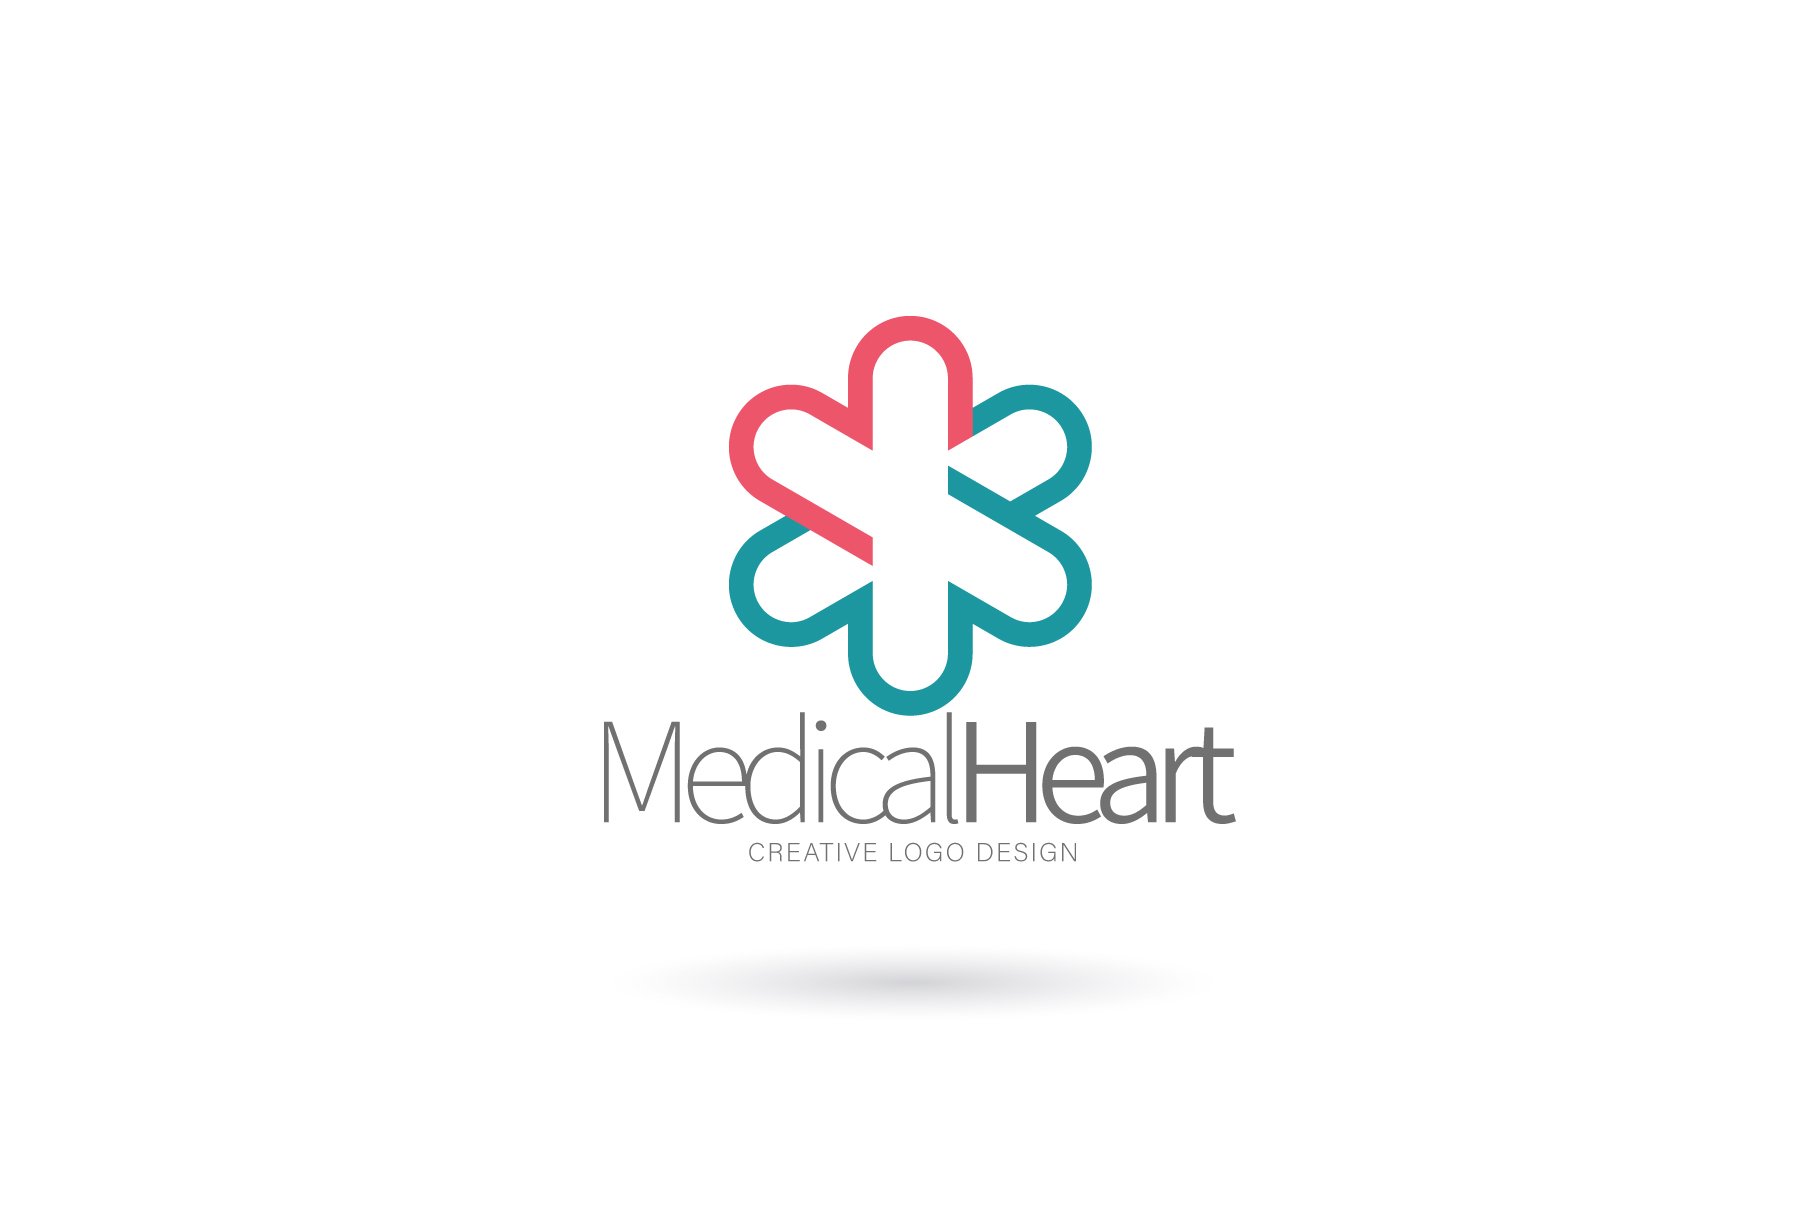 Medical logo,Cross logo template cover image.